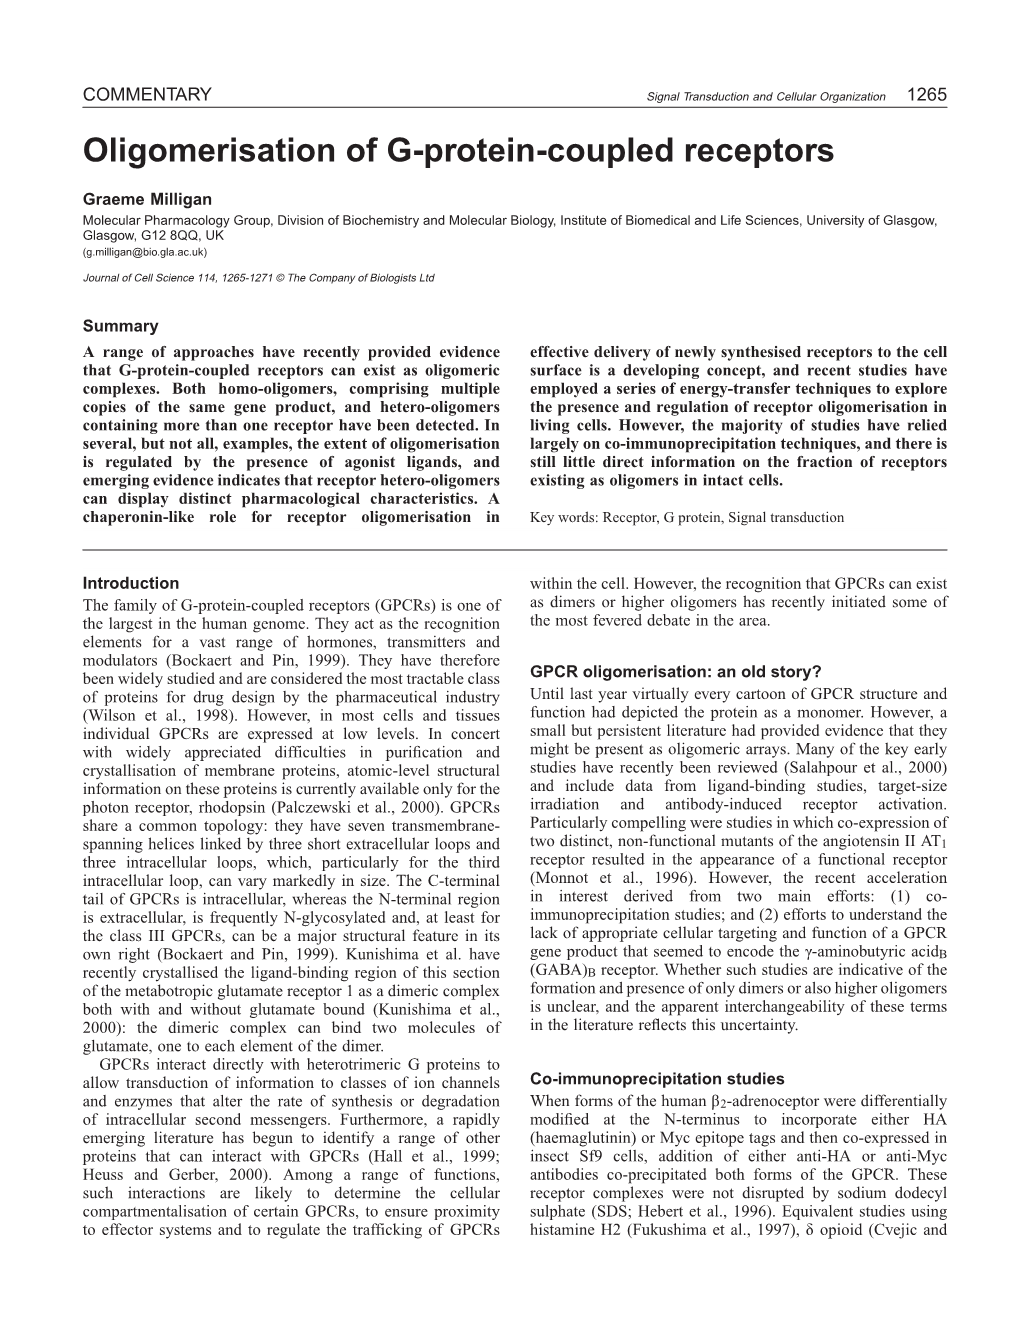 Oligomerisation of G-Protein-Coupled Receptors